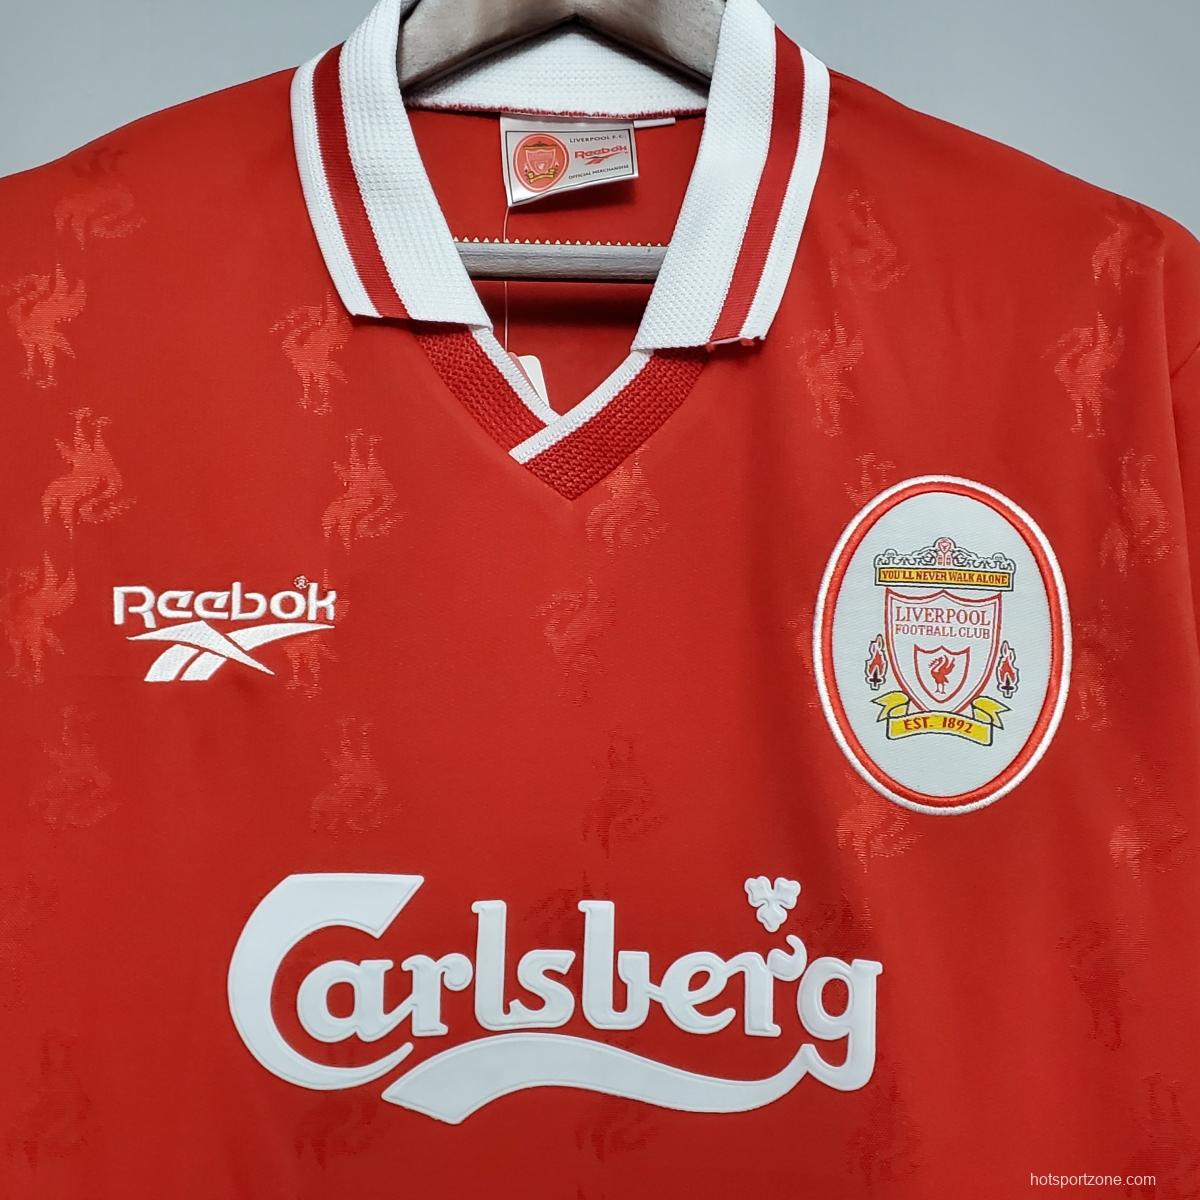 Retro 96/97 Liverpool home Soccer Jersey